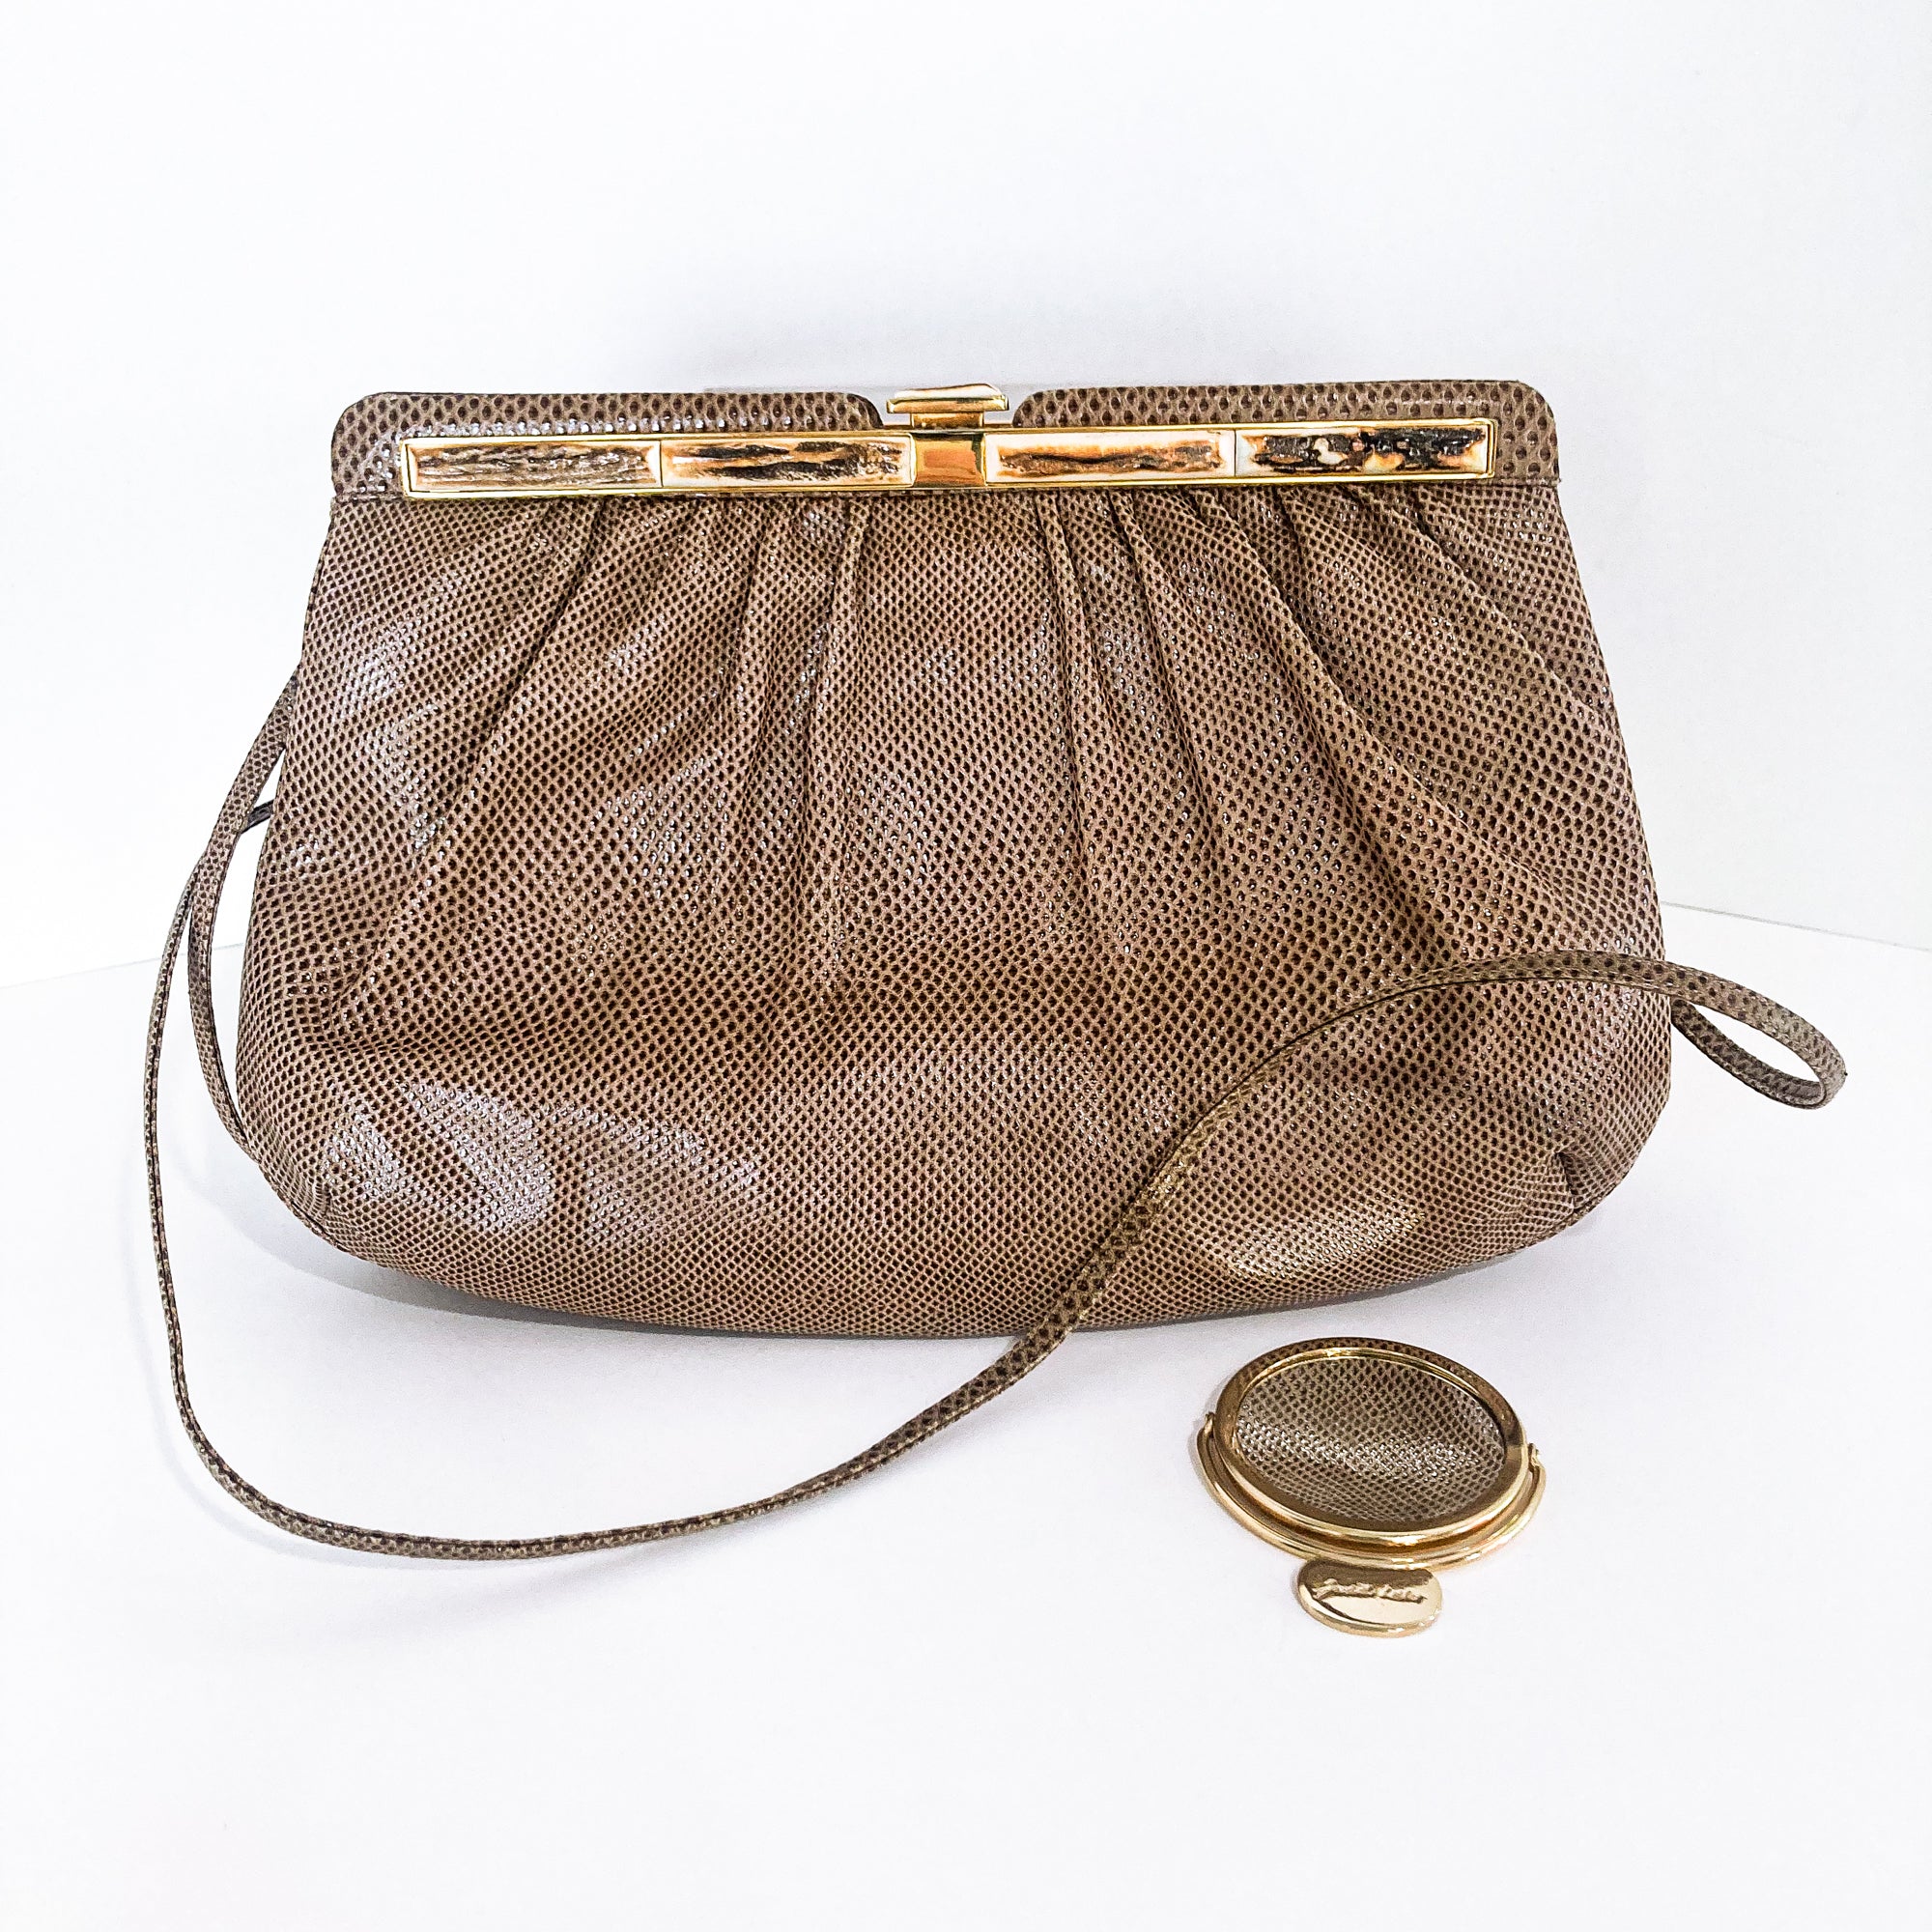 Lewis Vintage Leather Clutch Handbag Purse Zipper Gold Tassel Brown Leather  - $32 - From Pritandproper